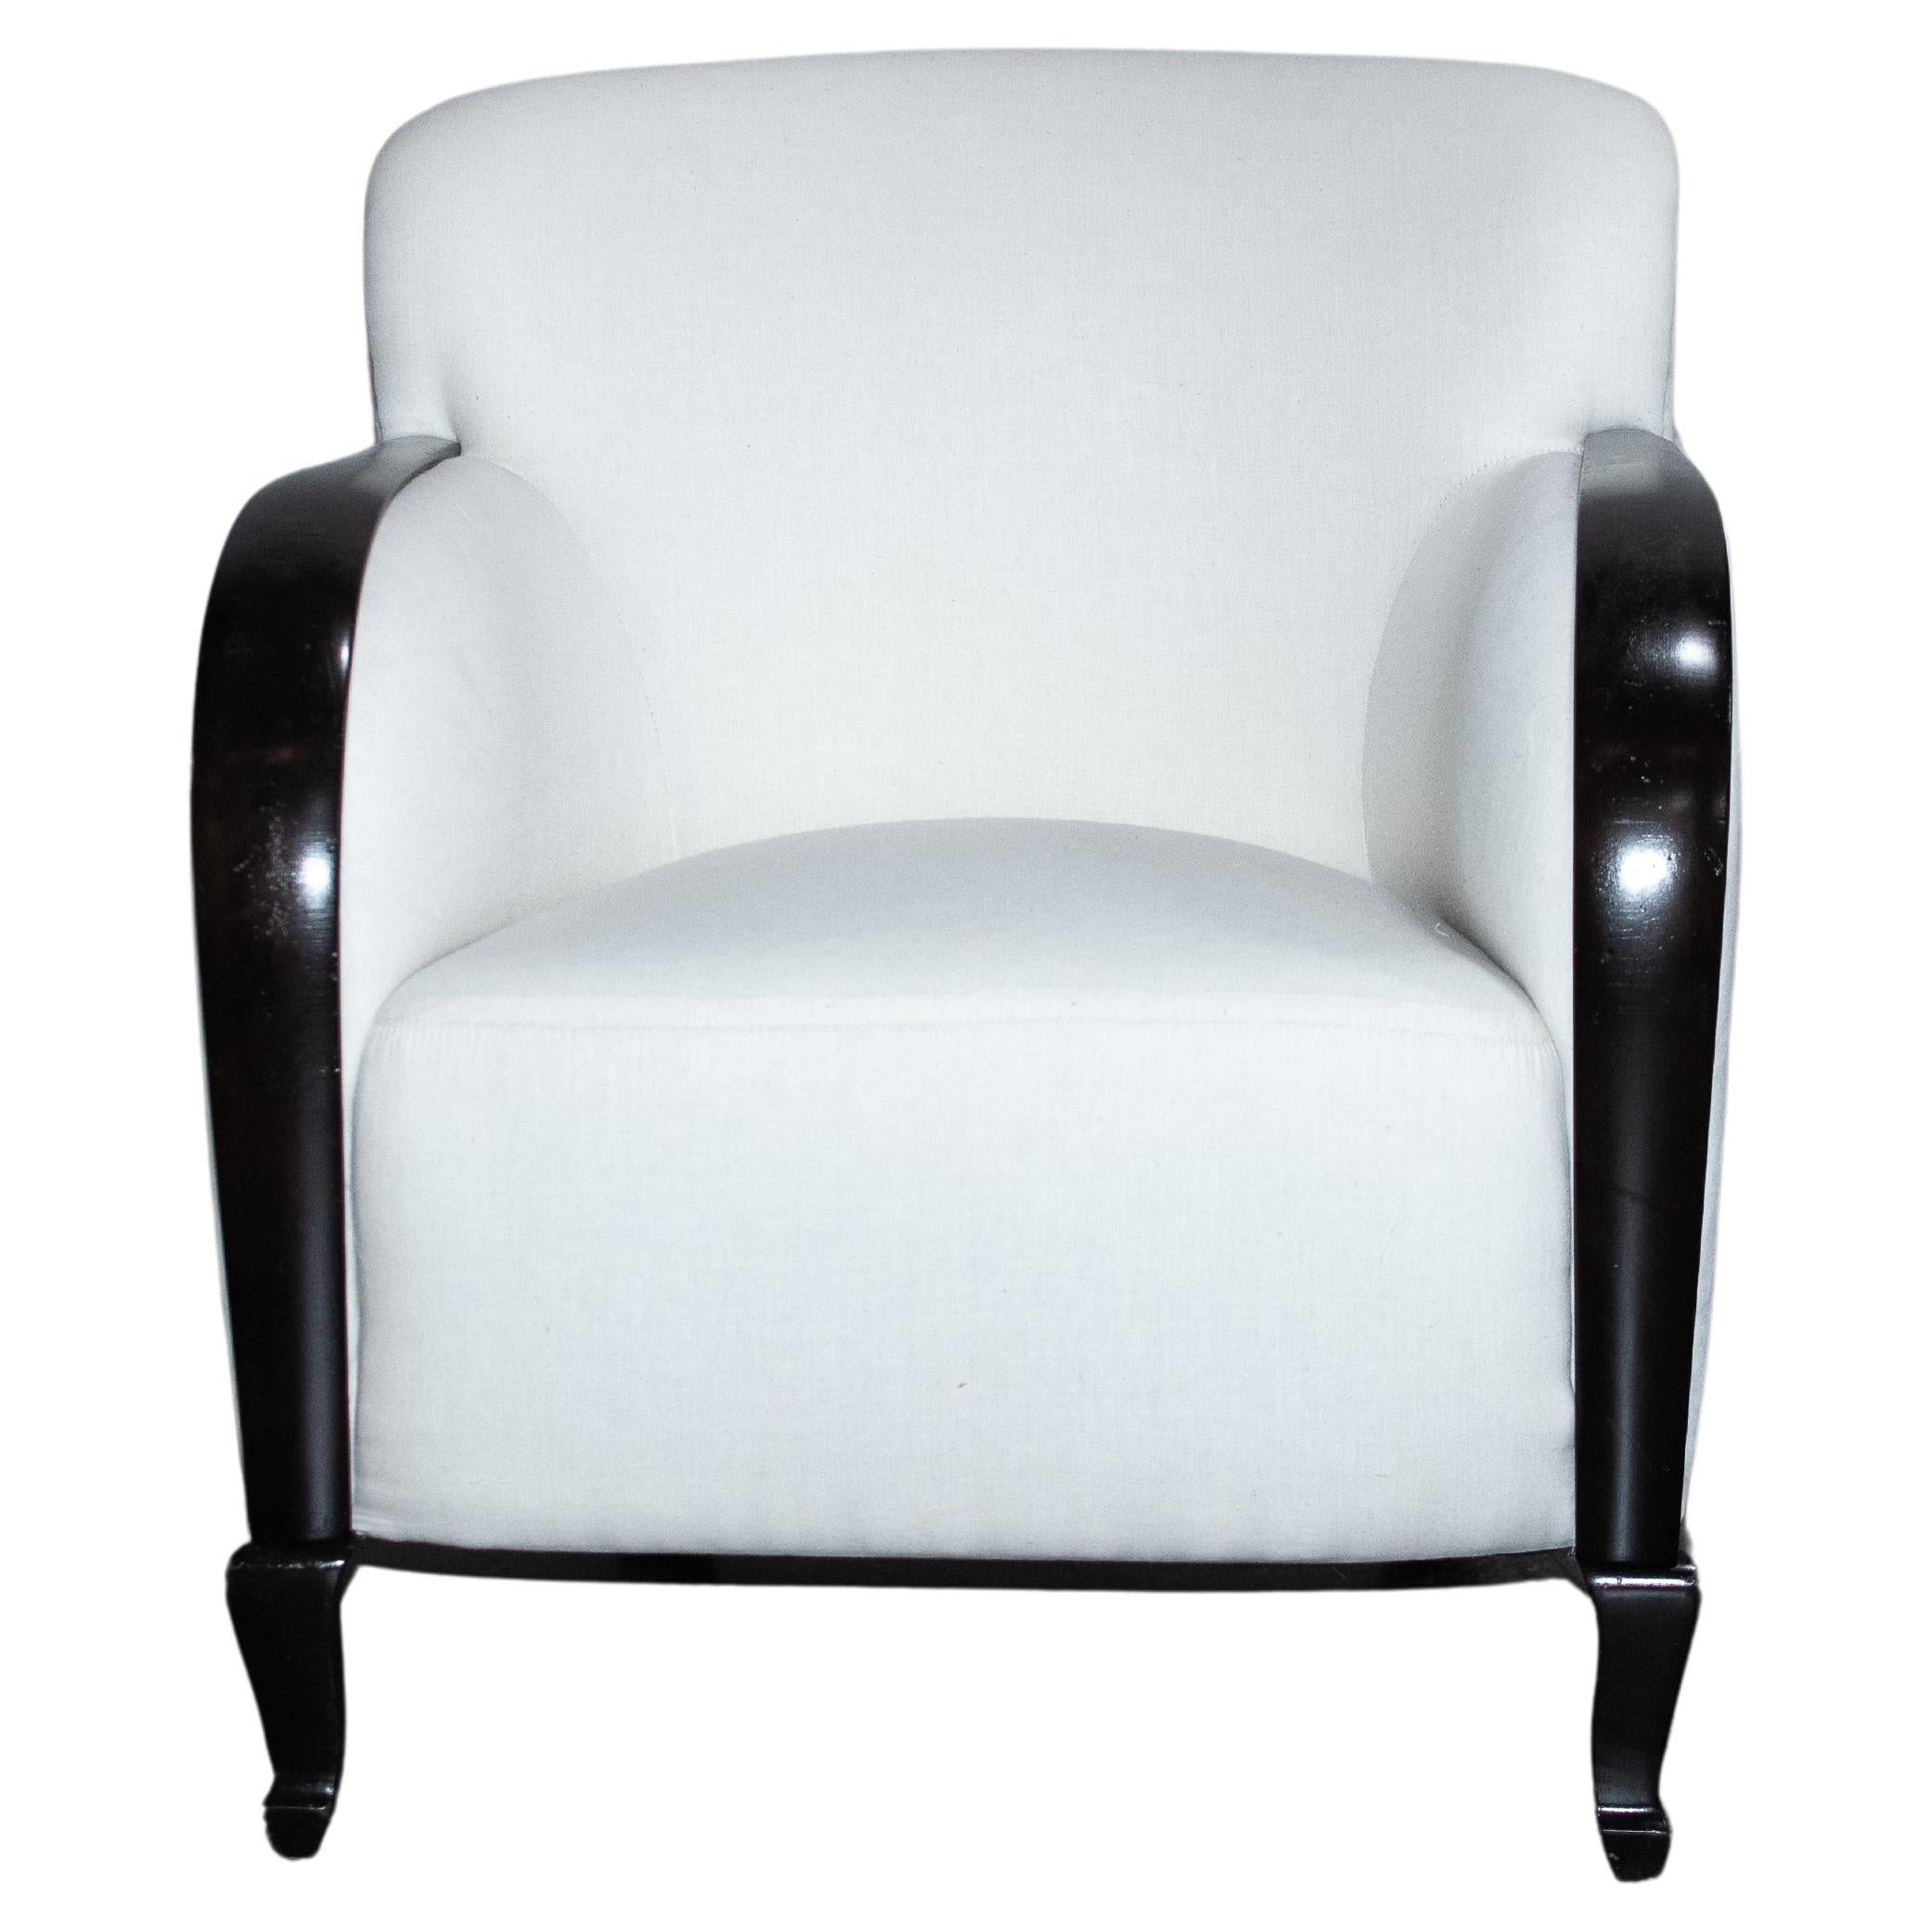 Swedish Art Deco Club Chair - COM Ready For Sale